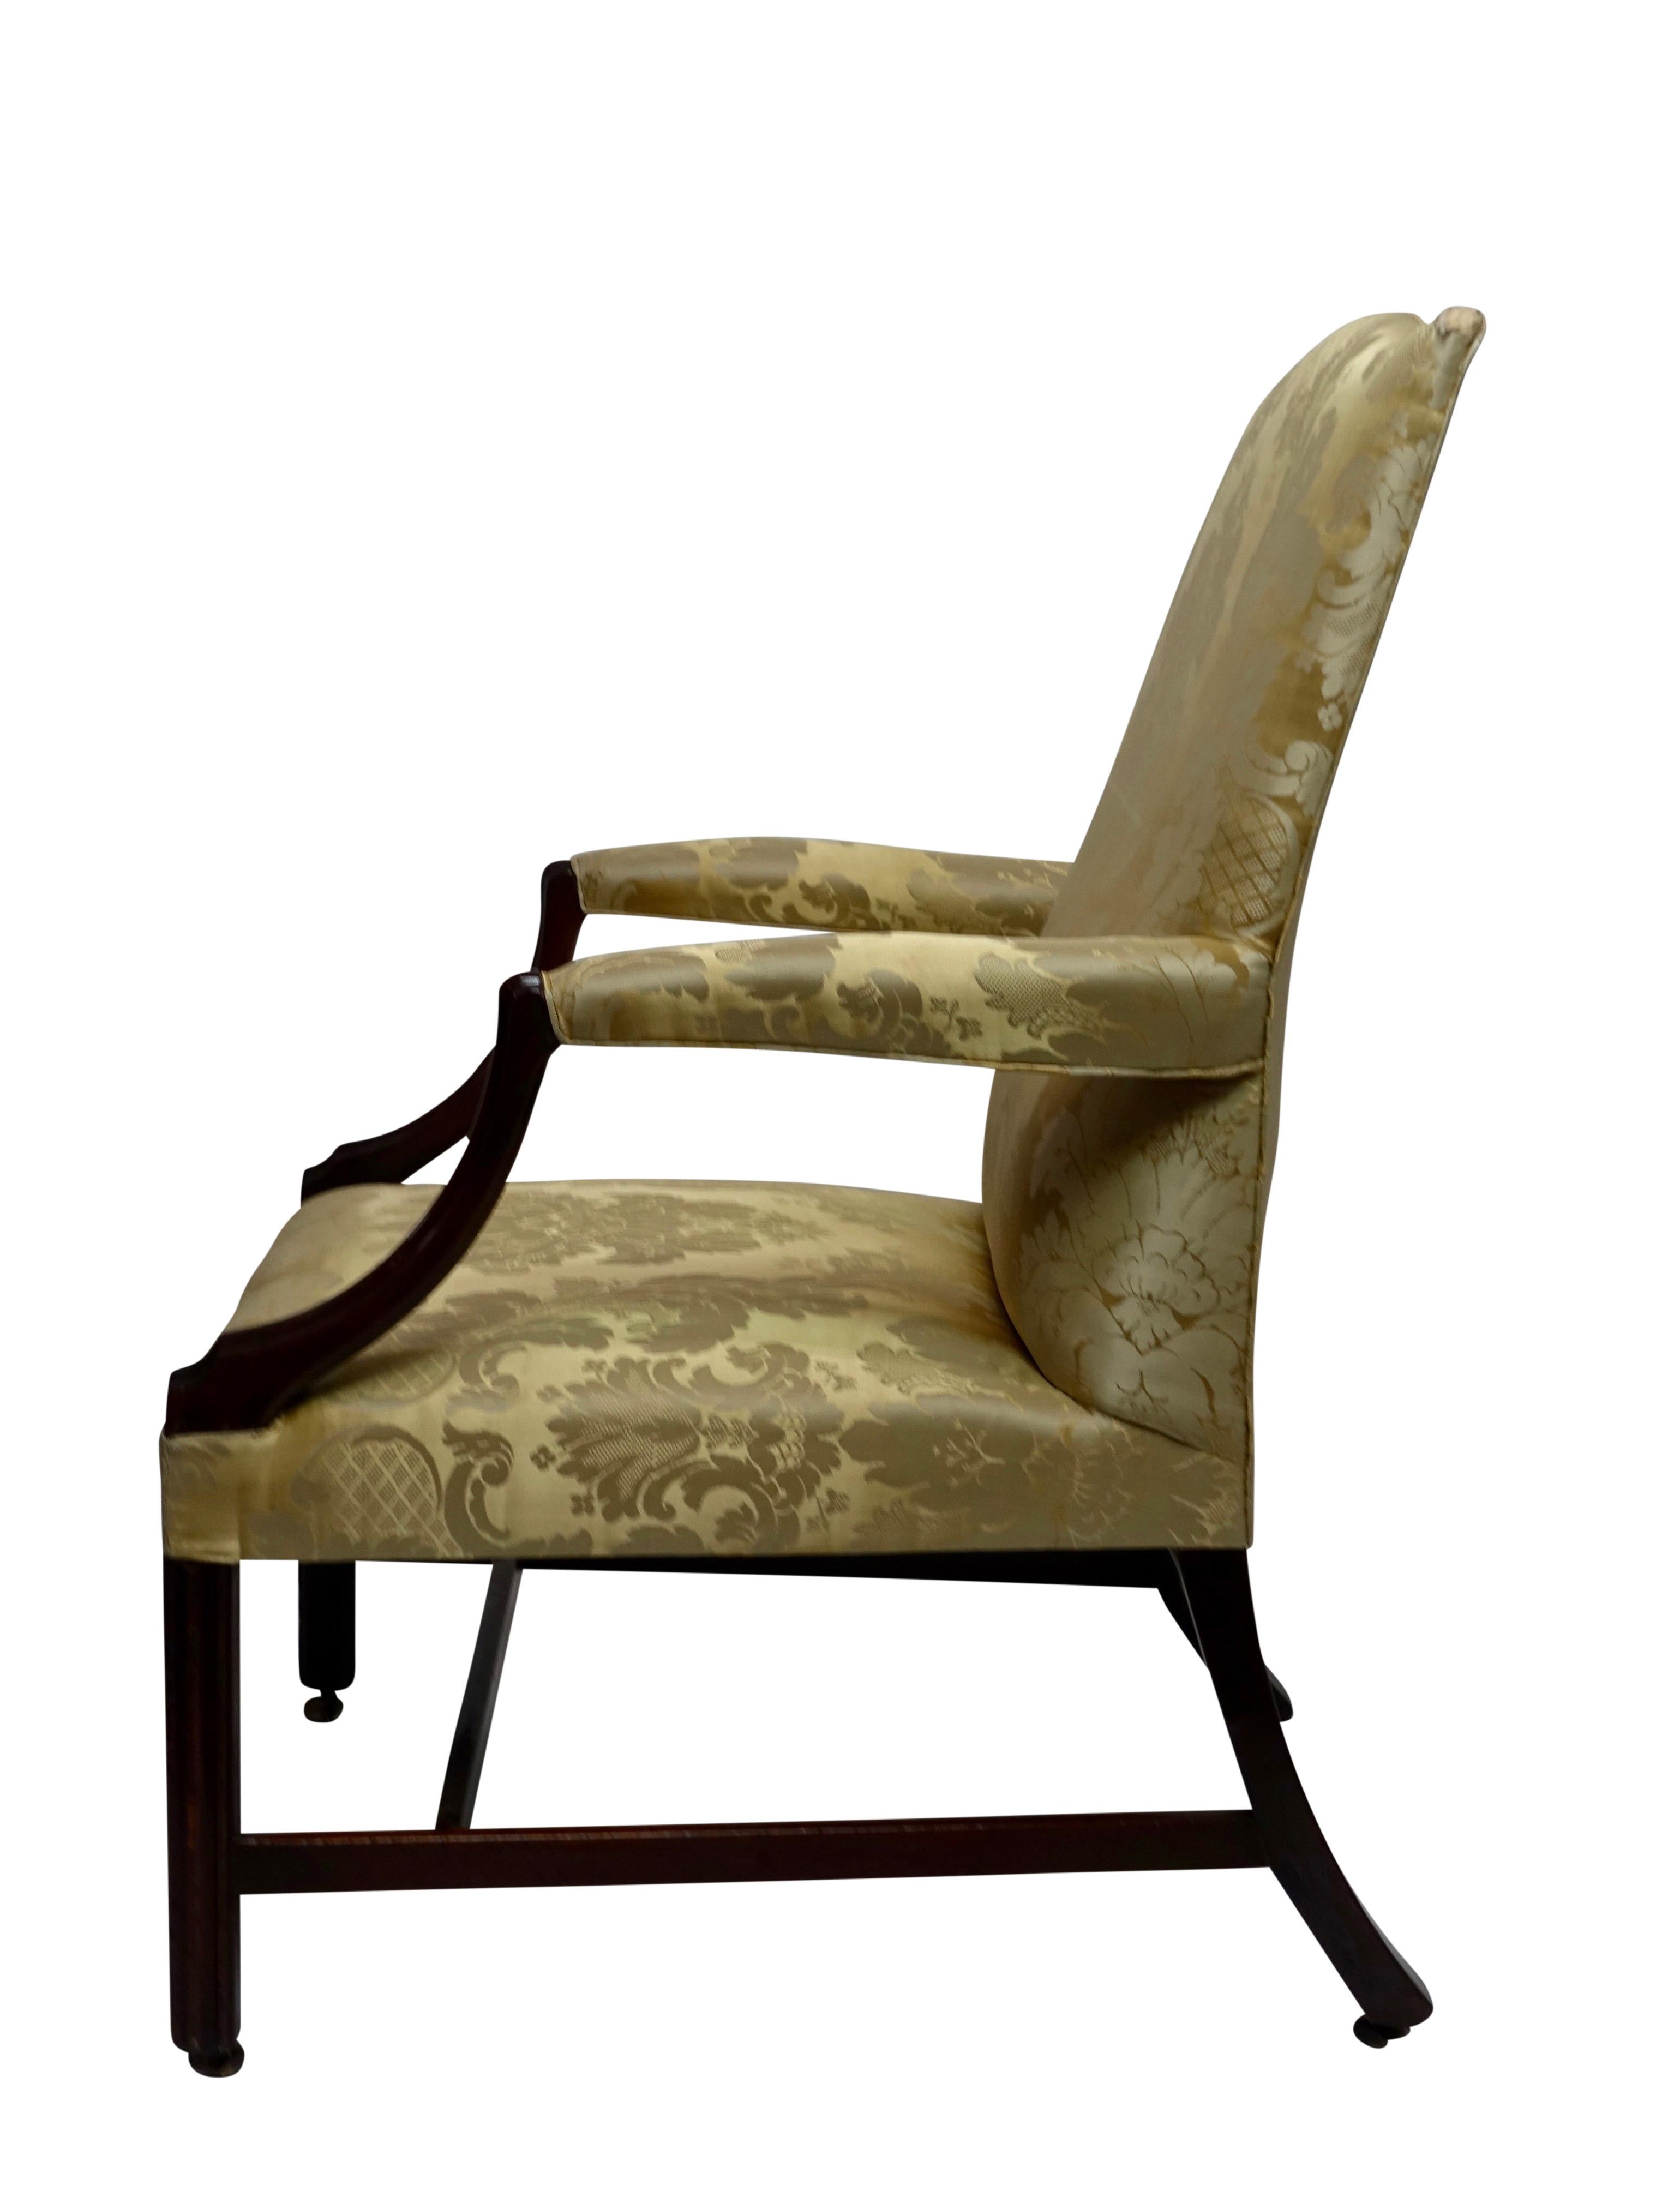 Mahogany Gainsborough Library Chair, England 18th Century 1